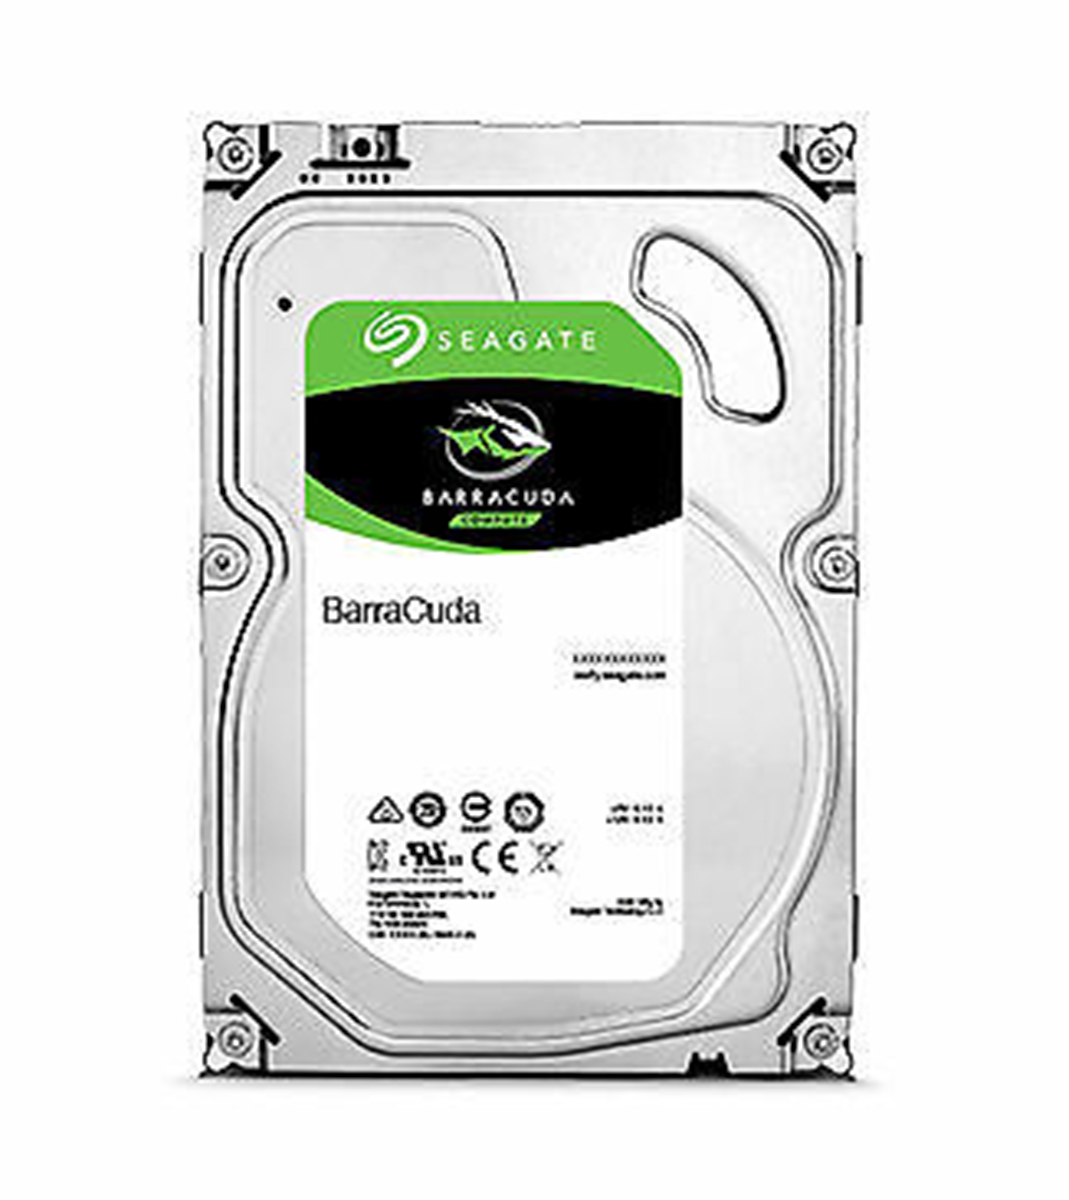 Seagate BarraCuda 1TB (1000GB) 7200RPM 3.5" Desktop Hard drive